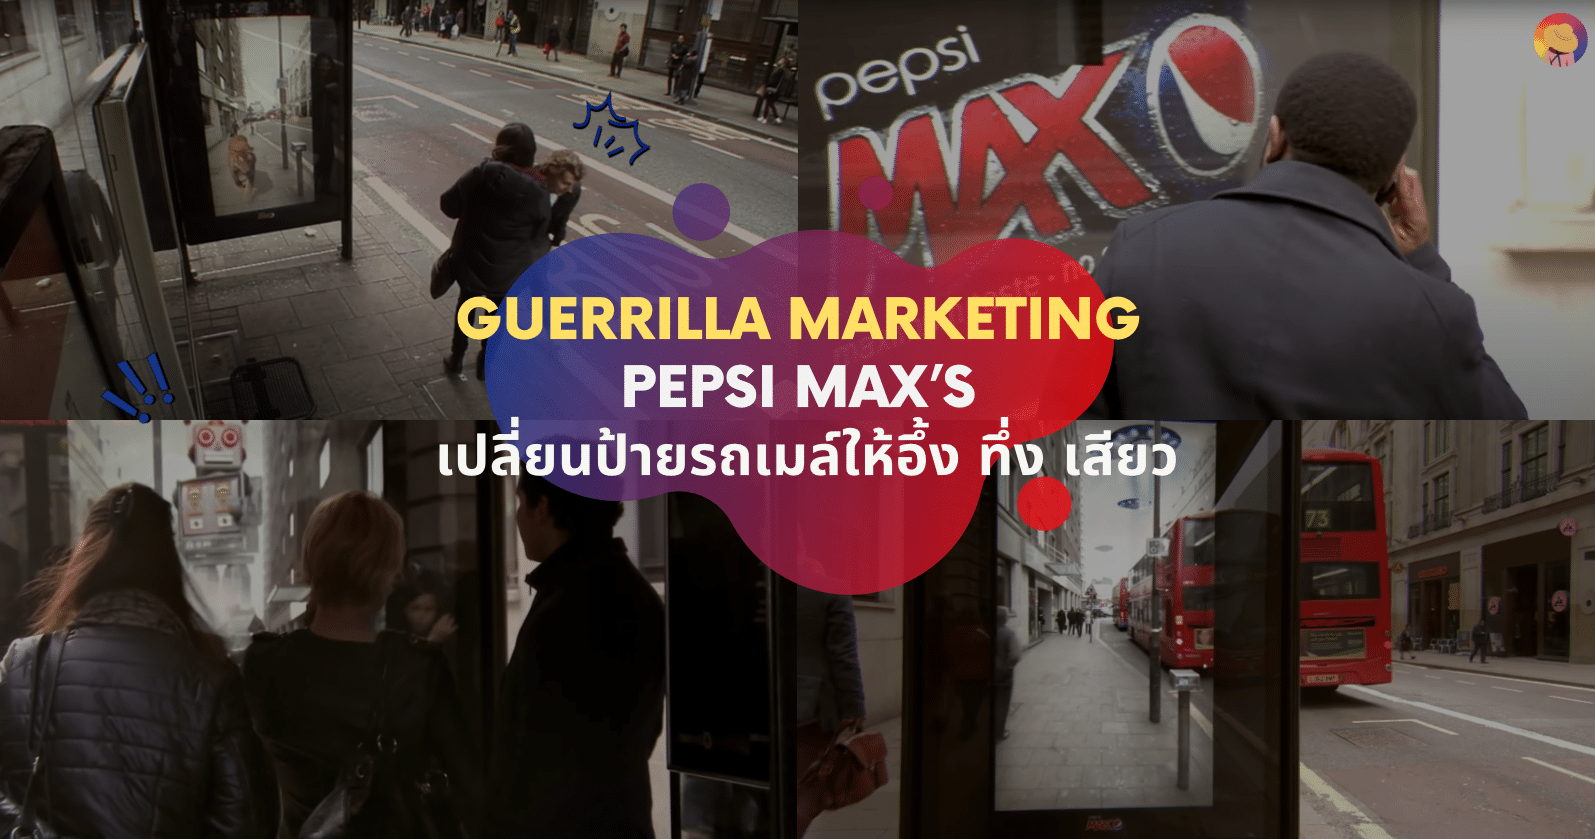 Guerrilla Marketing Pepsi Max’s เปลี่ยนป้ายรถเมล์ให้อึ้ง ทึ่ง เสียว